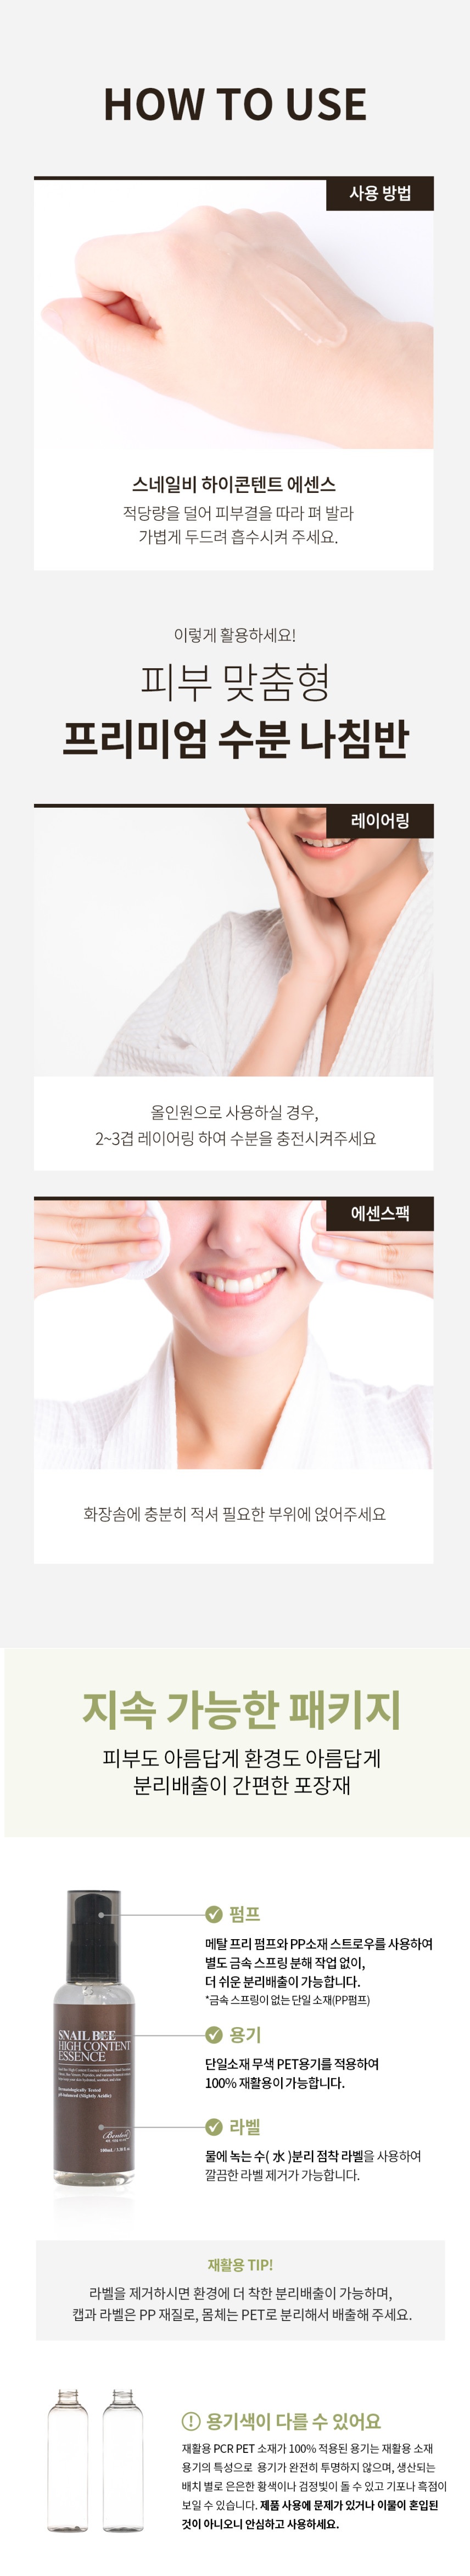 Benton Snail Bee High Content Essence korean skincare product online shop malaysia China romania6